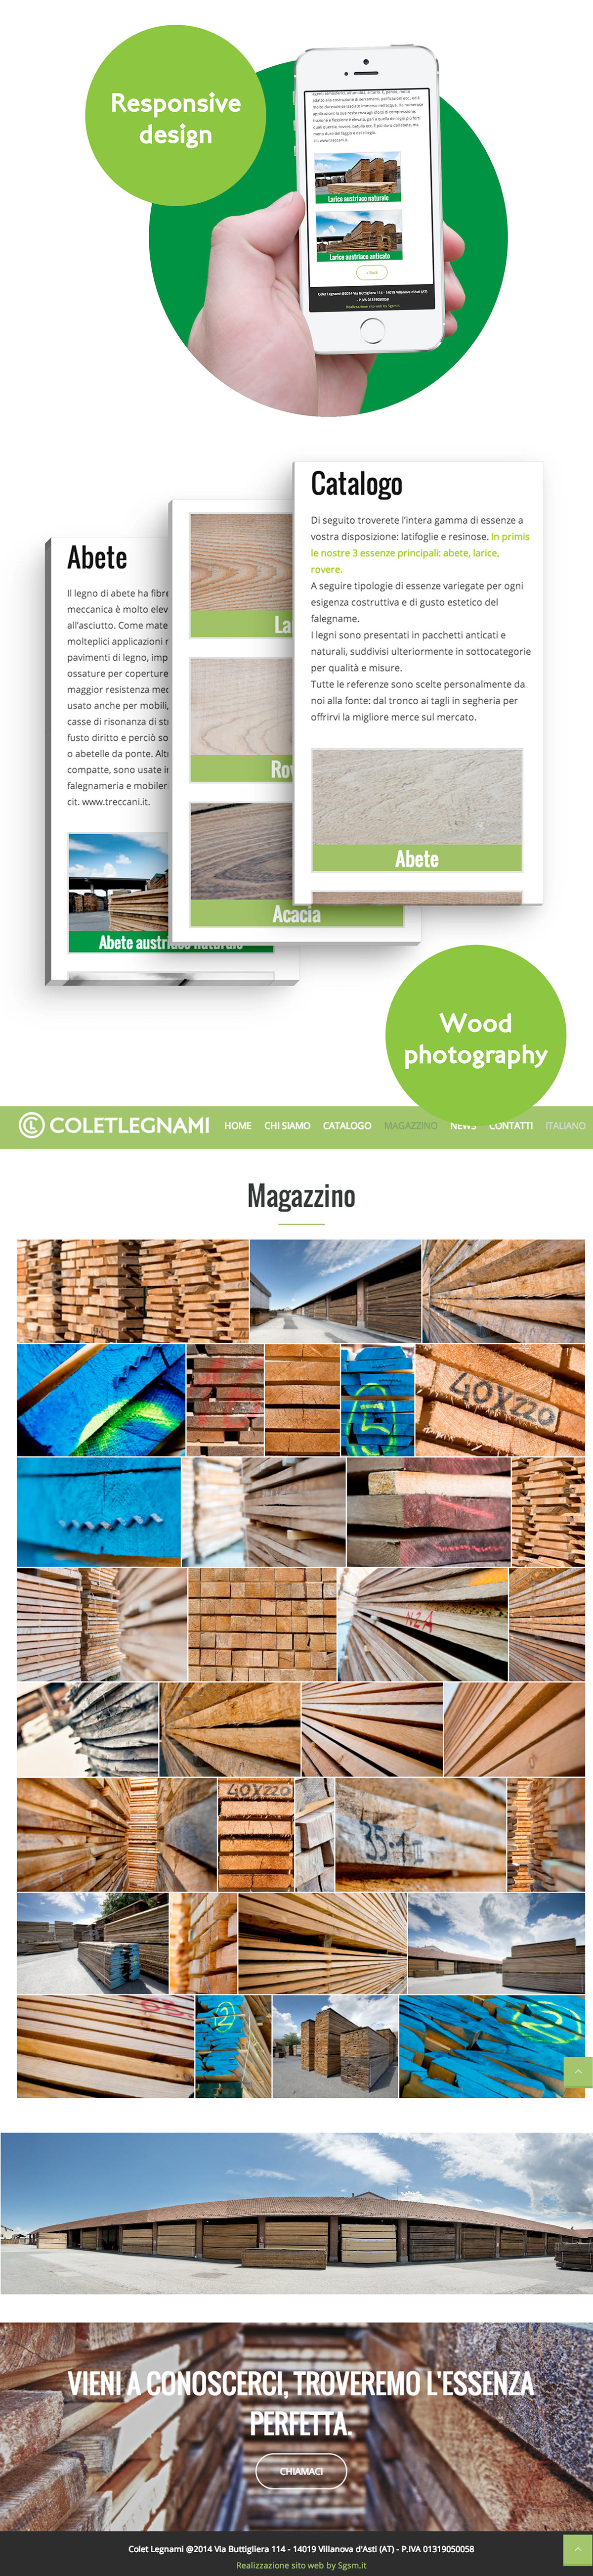 #colet legnami #wood #web   #photography #restyling #asti #rovere #larice #abete #bois #sapin #legname #villanova d'asti SGSM bricherasio